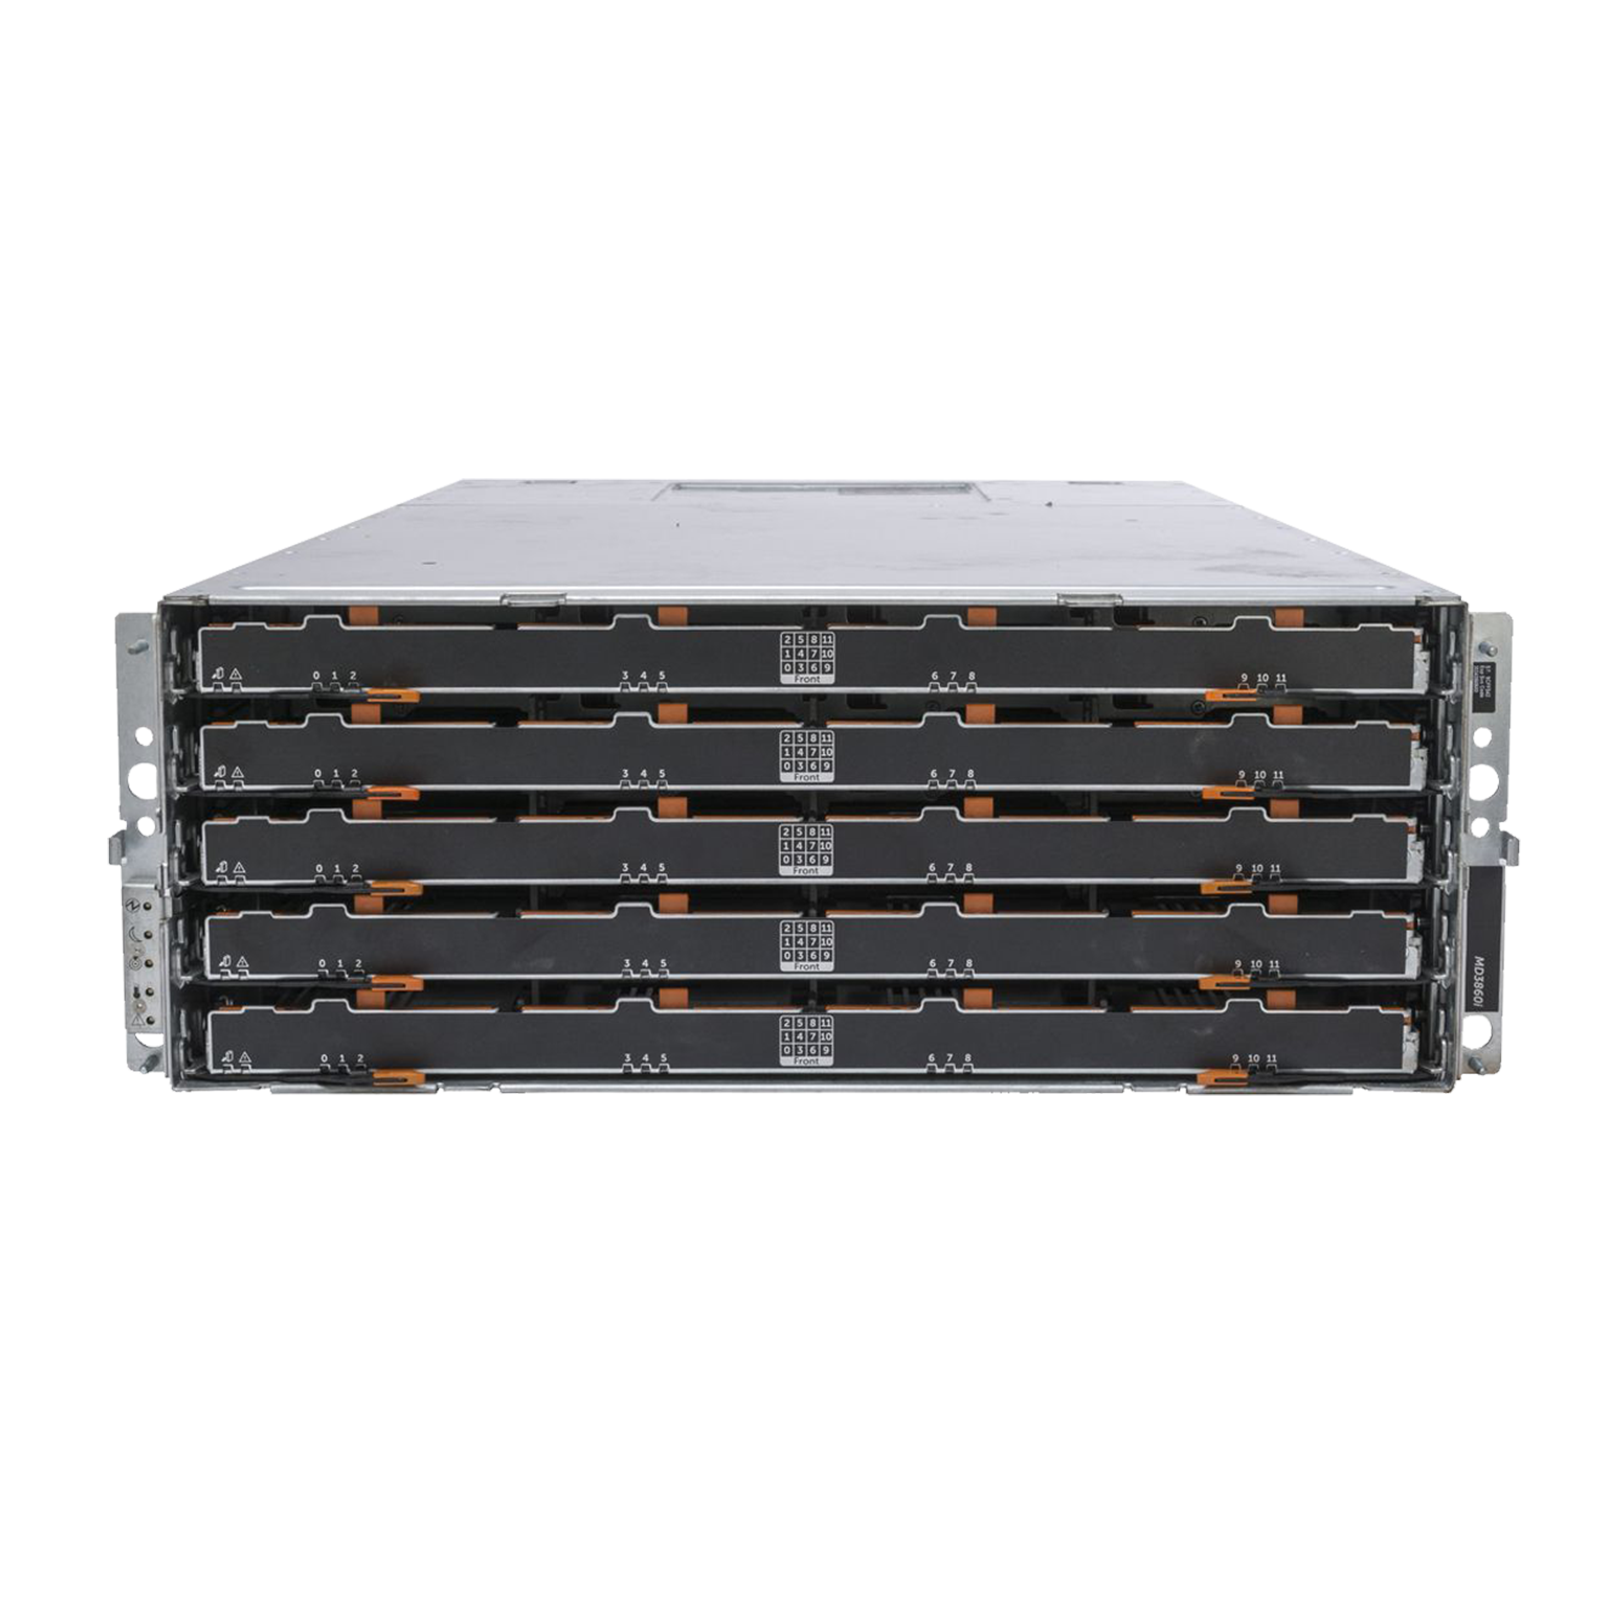 Dell PowerVault MD3460 Storage Array (60x 1TB 12G SAS, 2x 12G SAS Controllers)